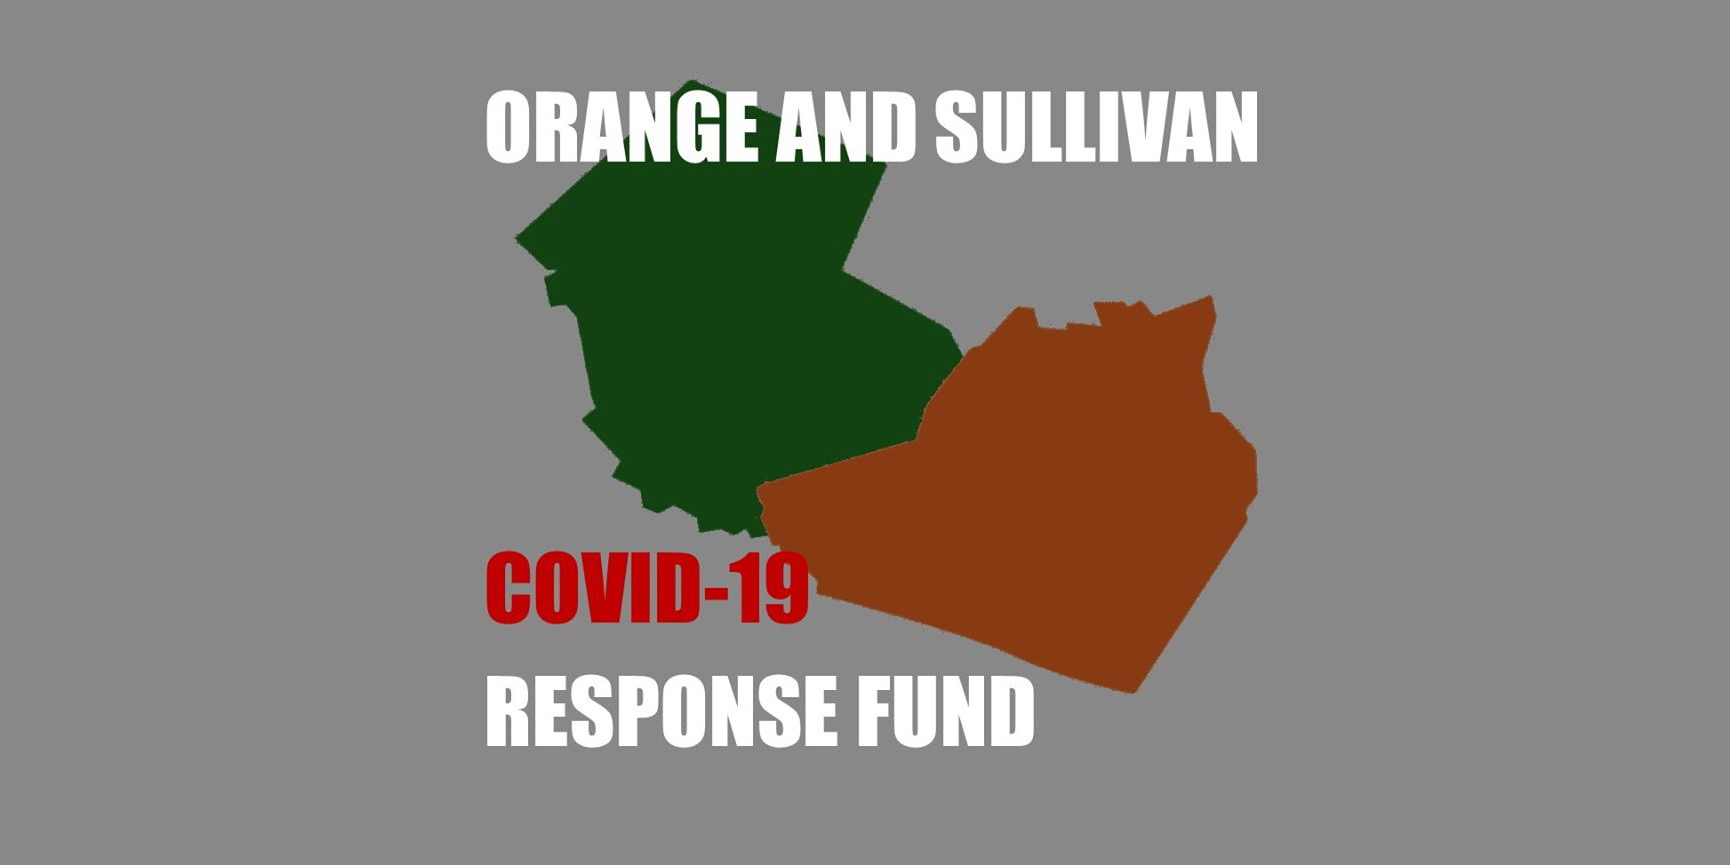 Community Foundation of Orange and Sullivan COVID-19 Response Fund